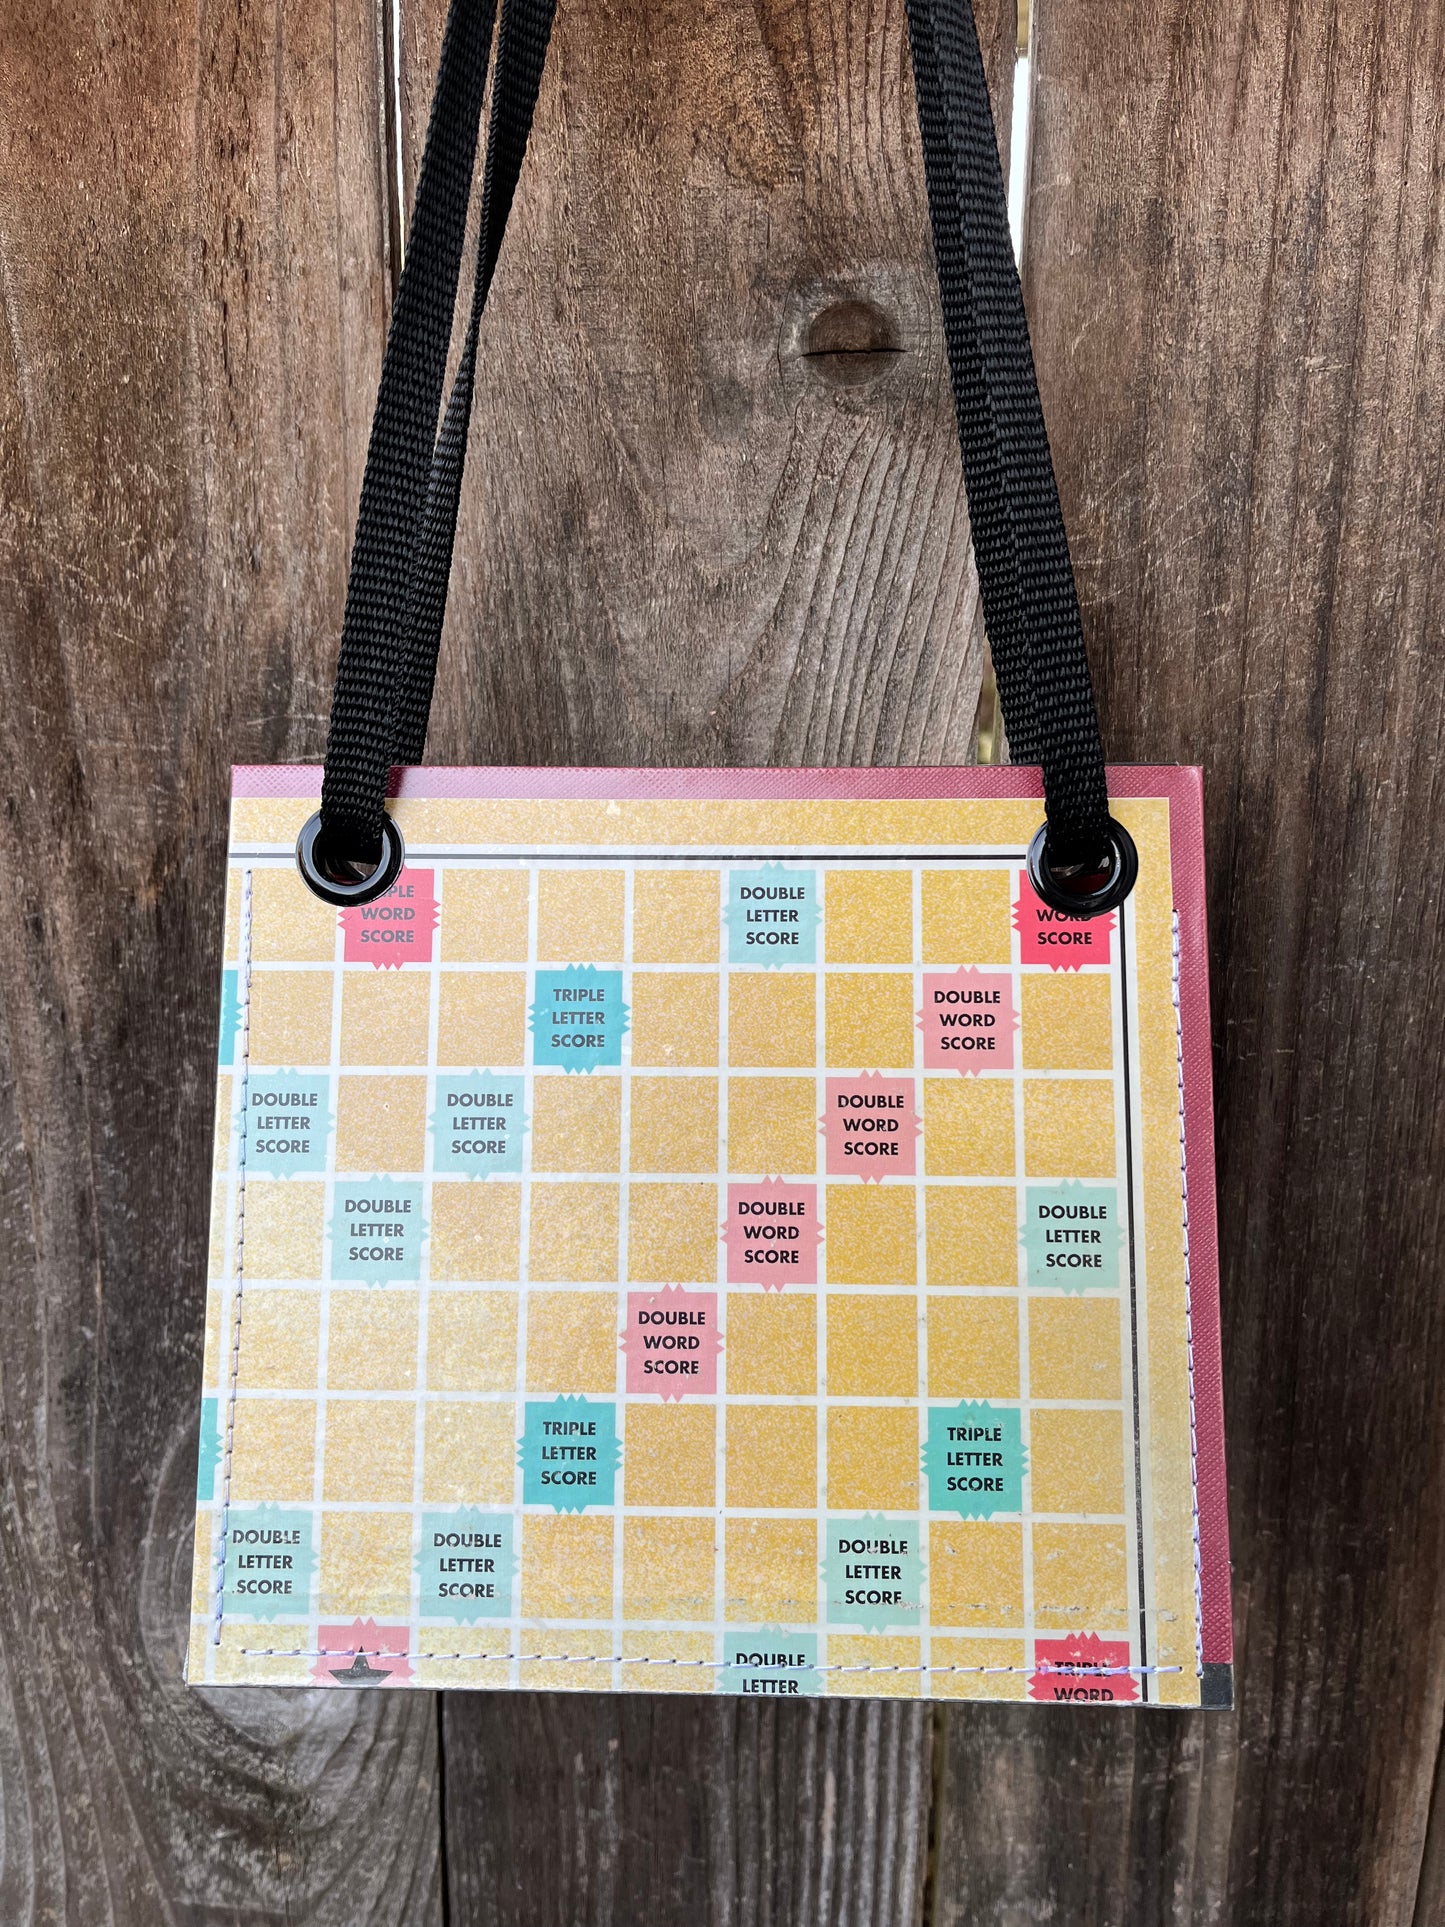 Gameboard Bag - Small Scrabble